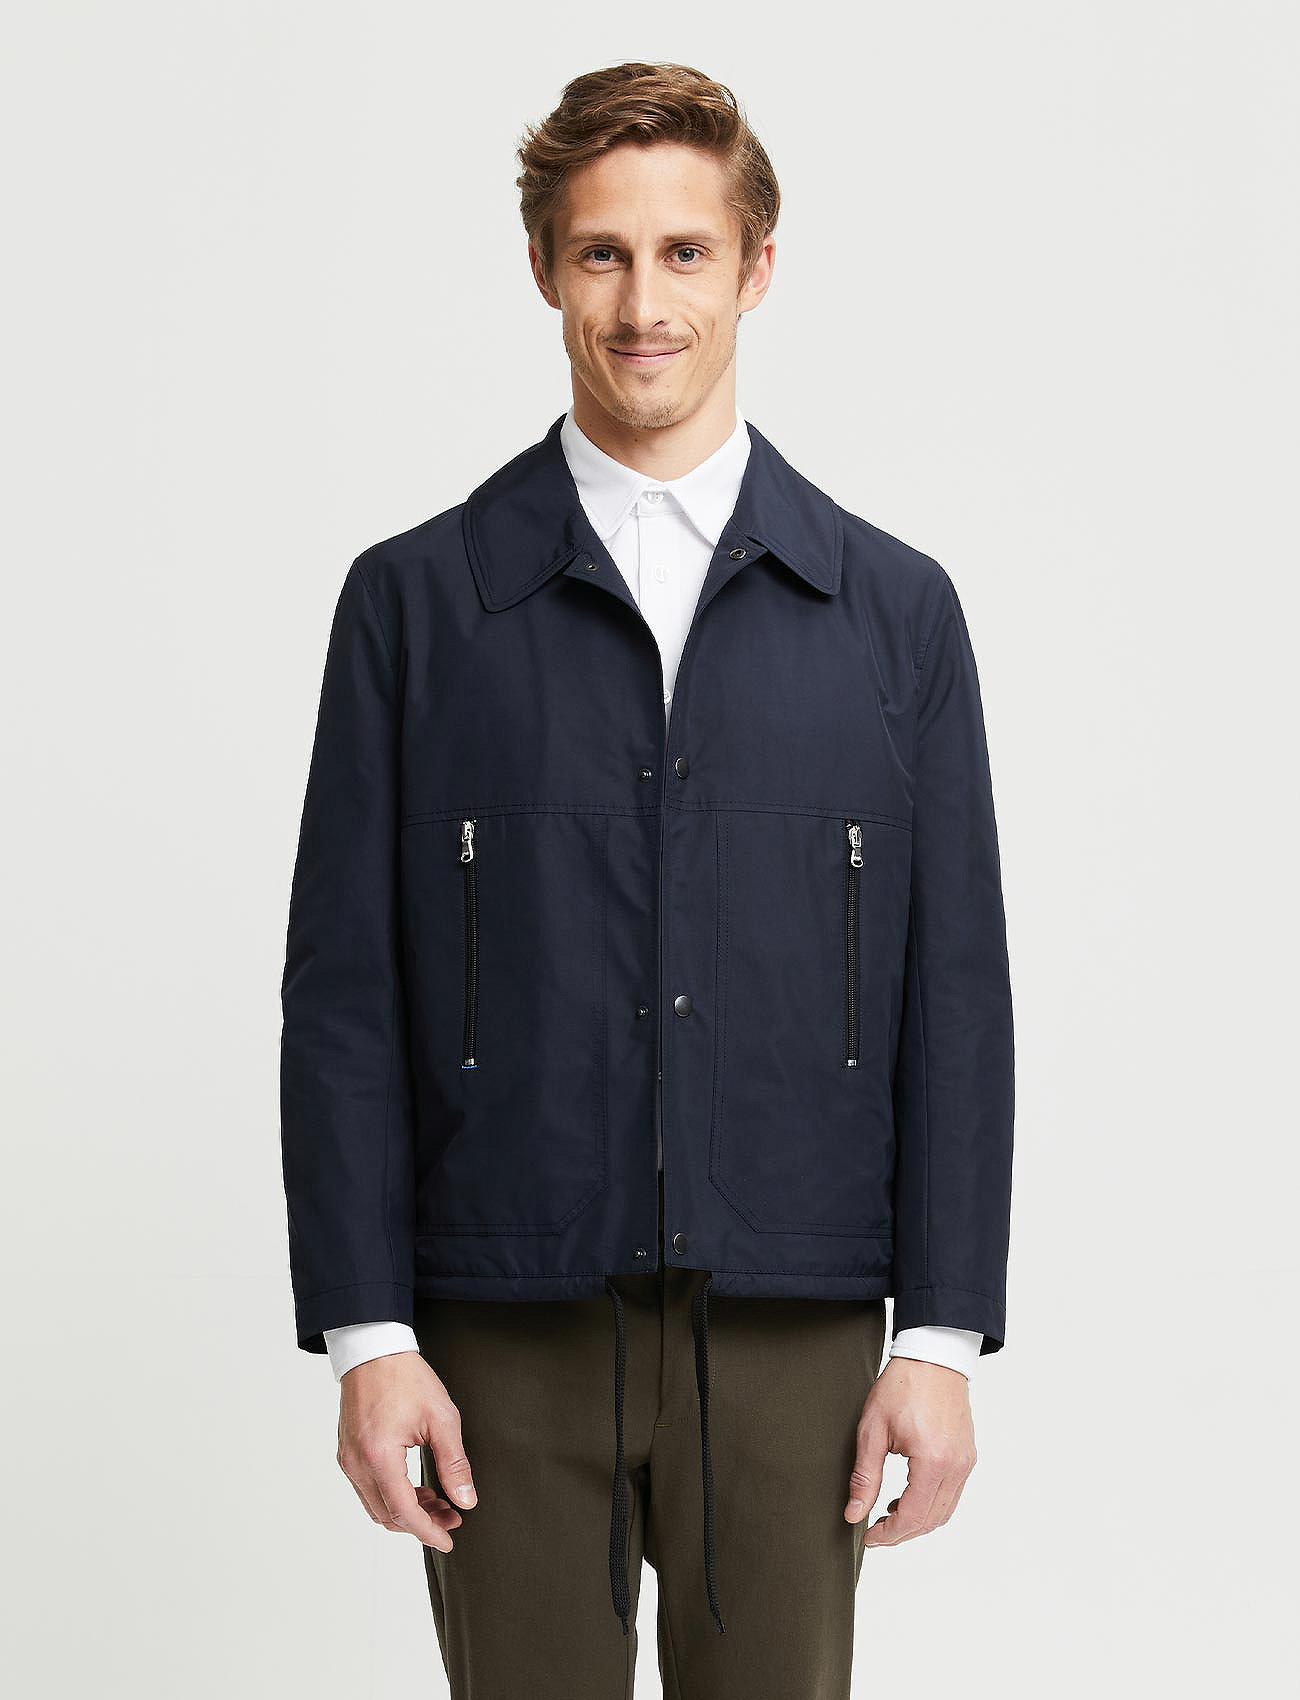 FRENN Oiva Jacket - 195.44 €. Koop Windjassen van FRENN online op Boozt.com. Snelle levering & retour